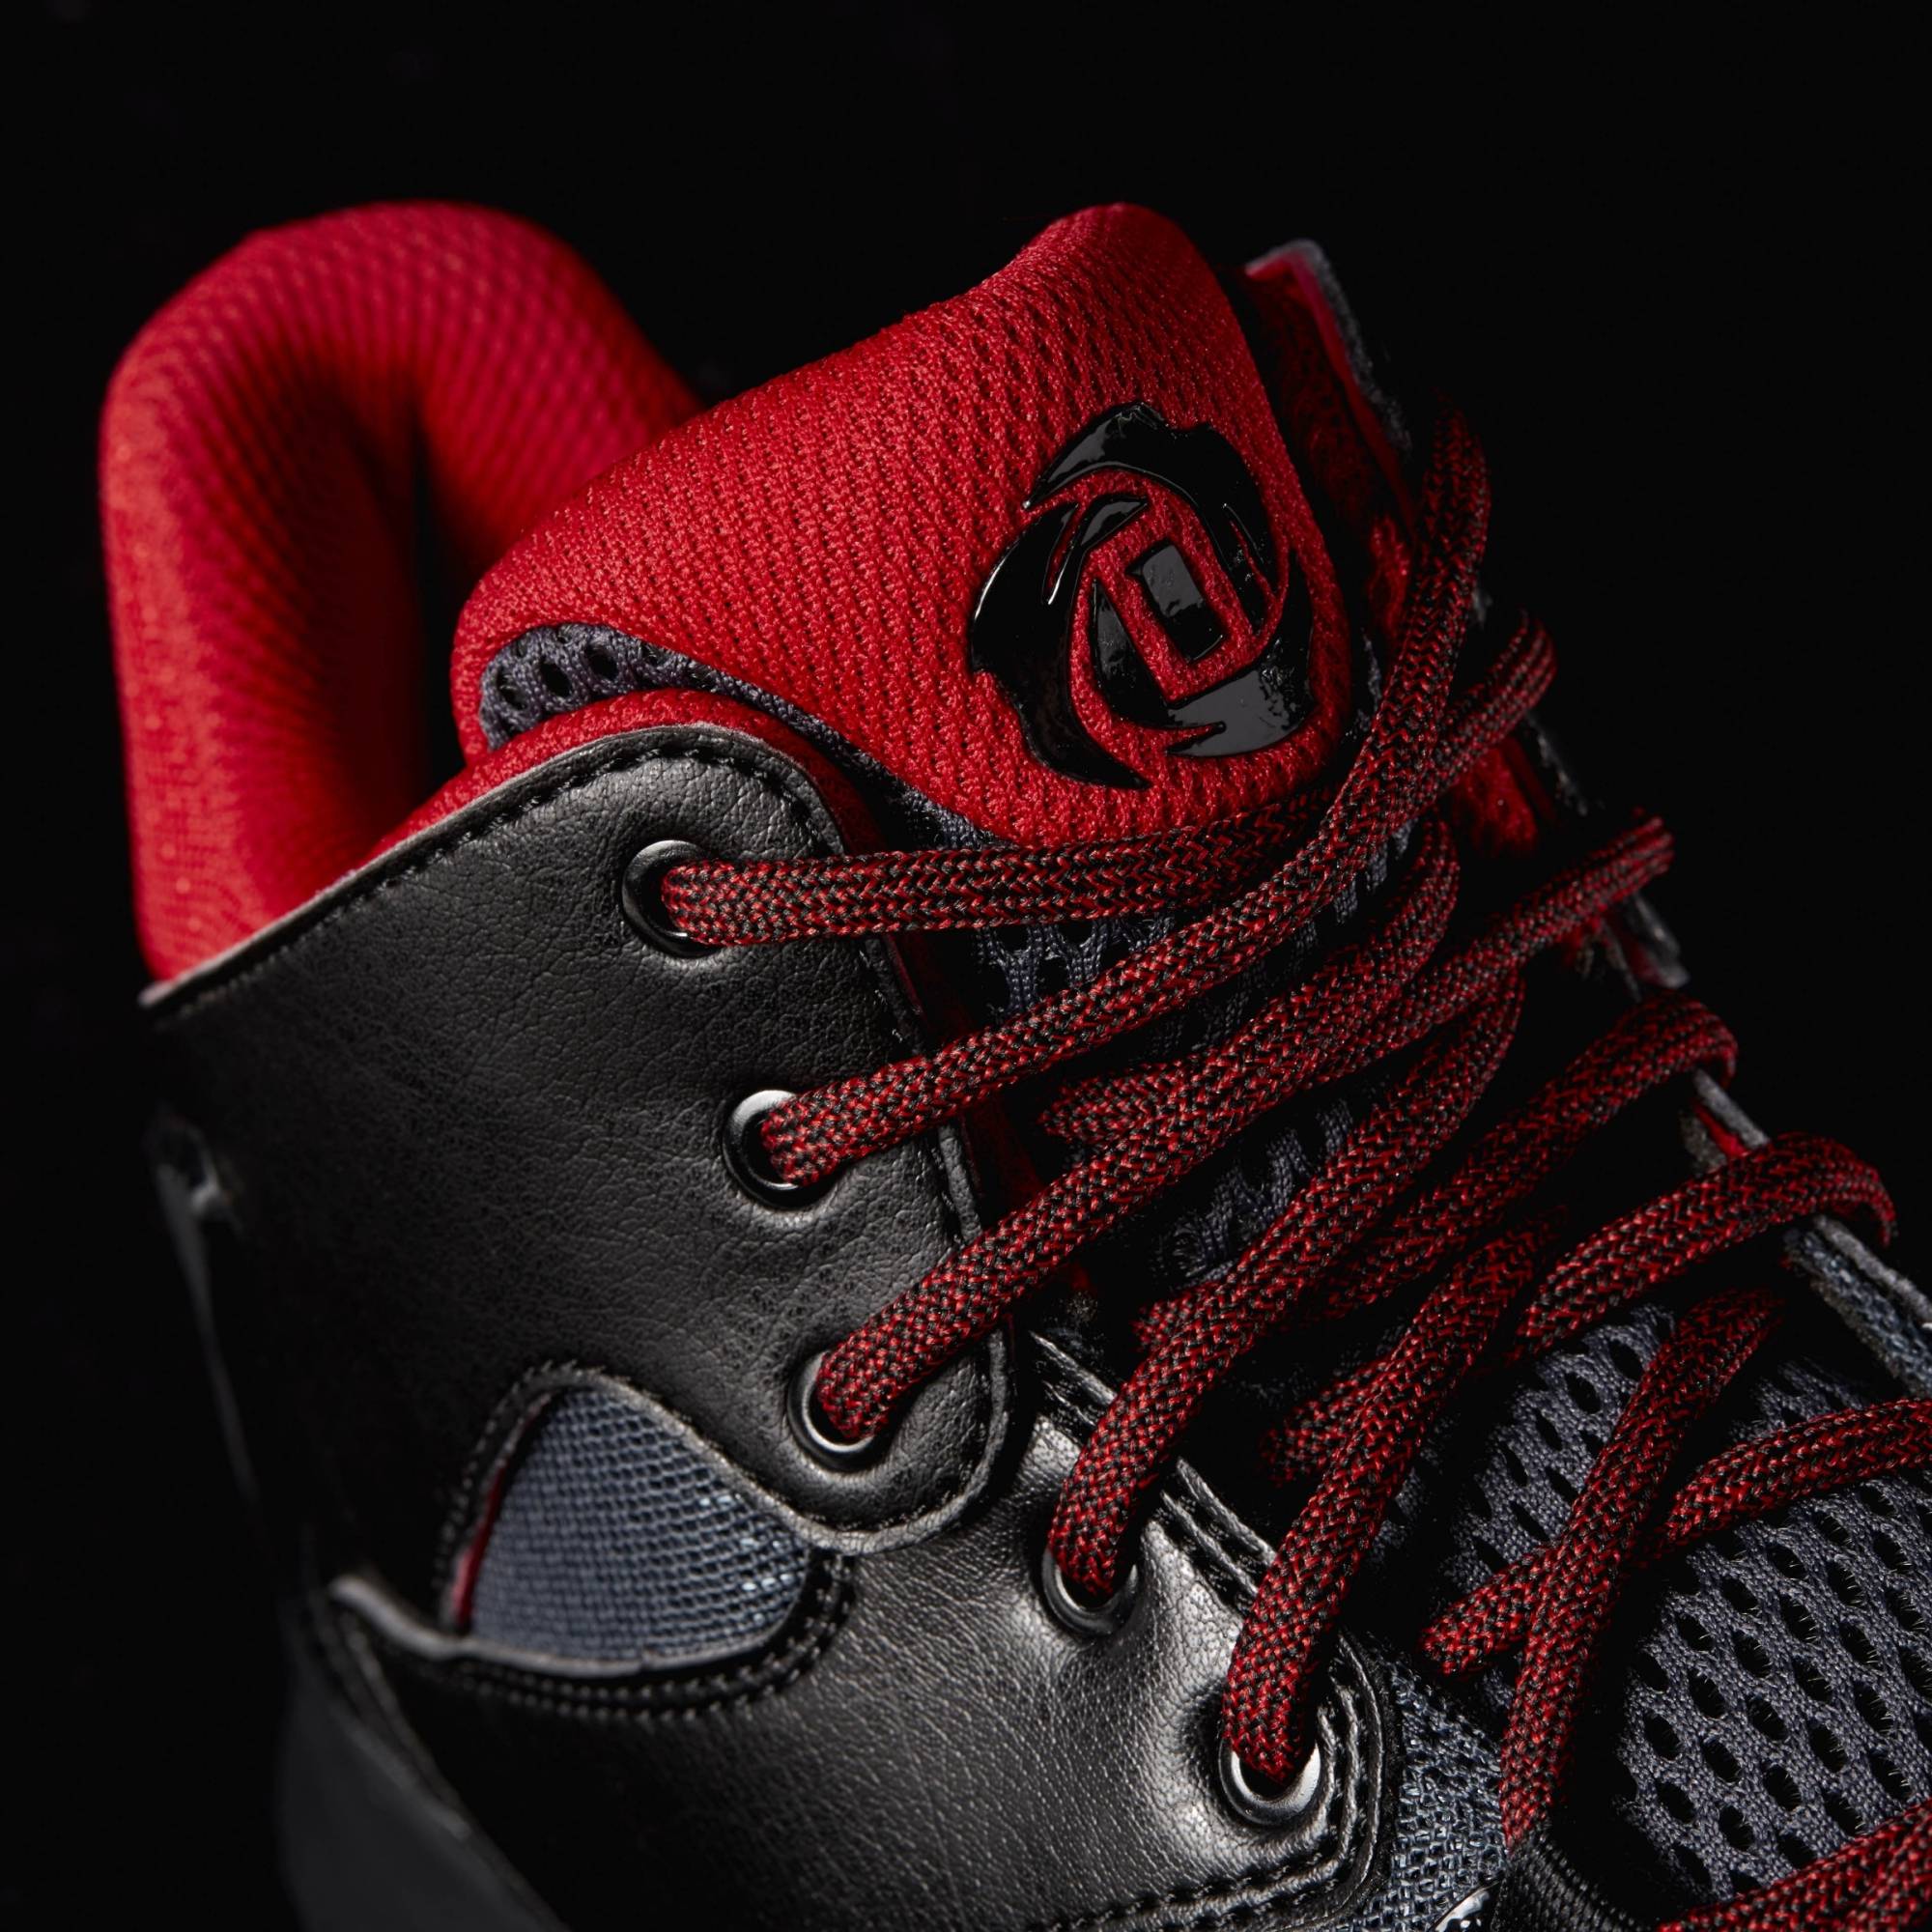 Adidas D-Rose 773 V Basketball Boot/Shoe - Black/Red – SwiSh basketball